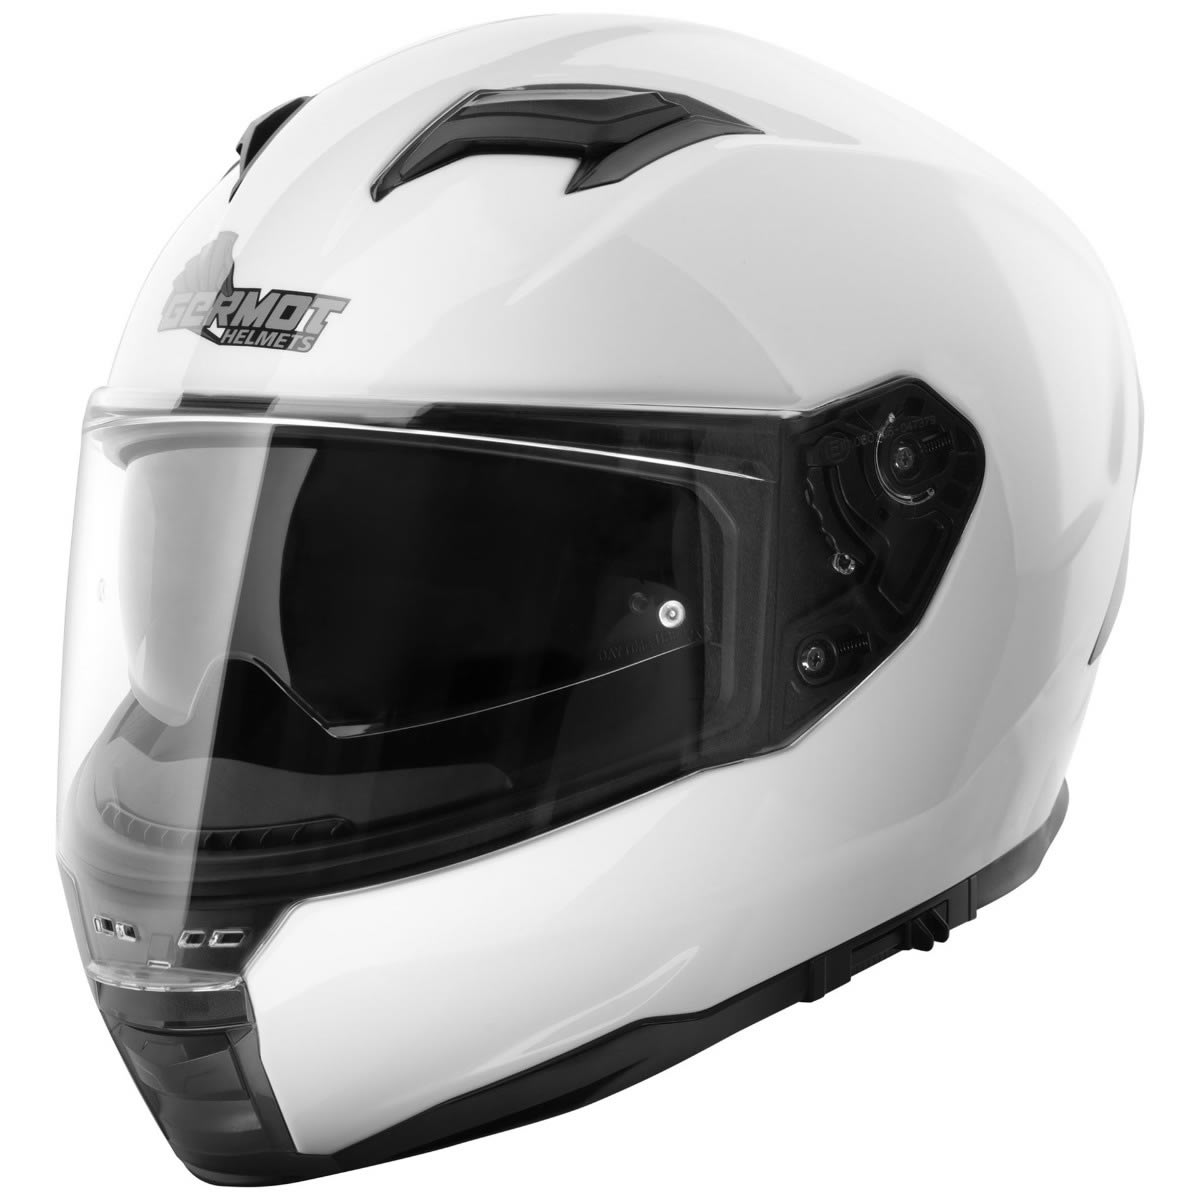 Germot GM 350 Helm, weiß